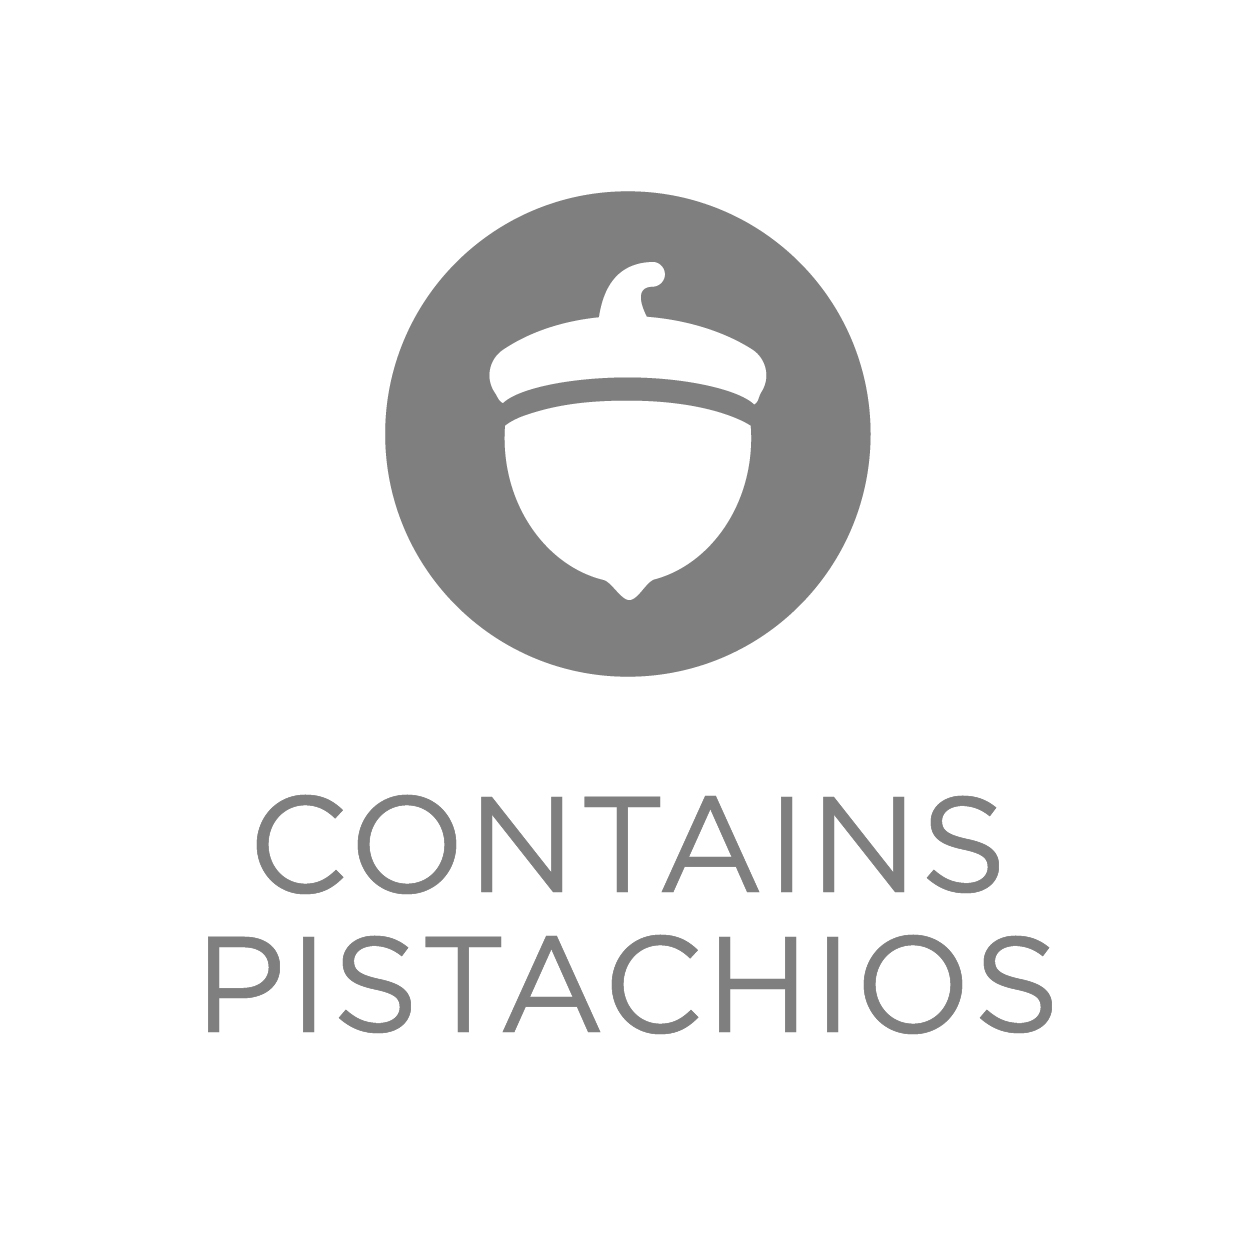 Contains Pistachio